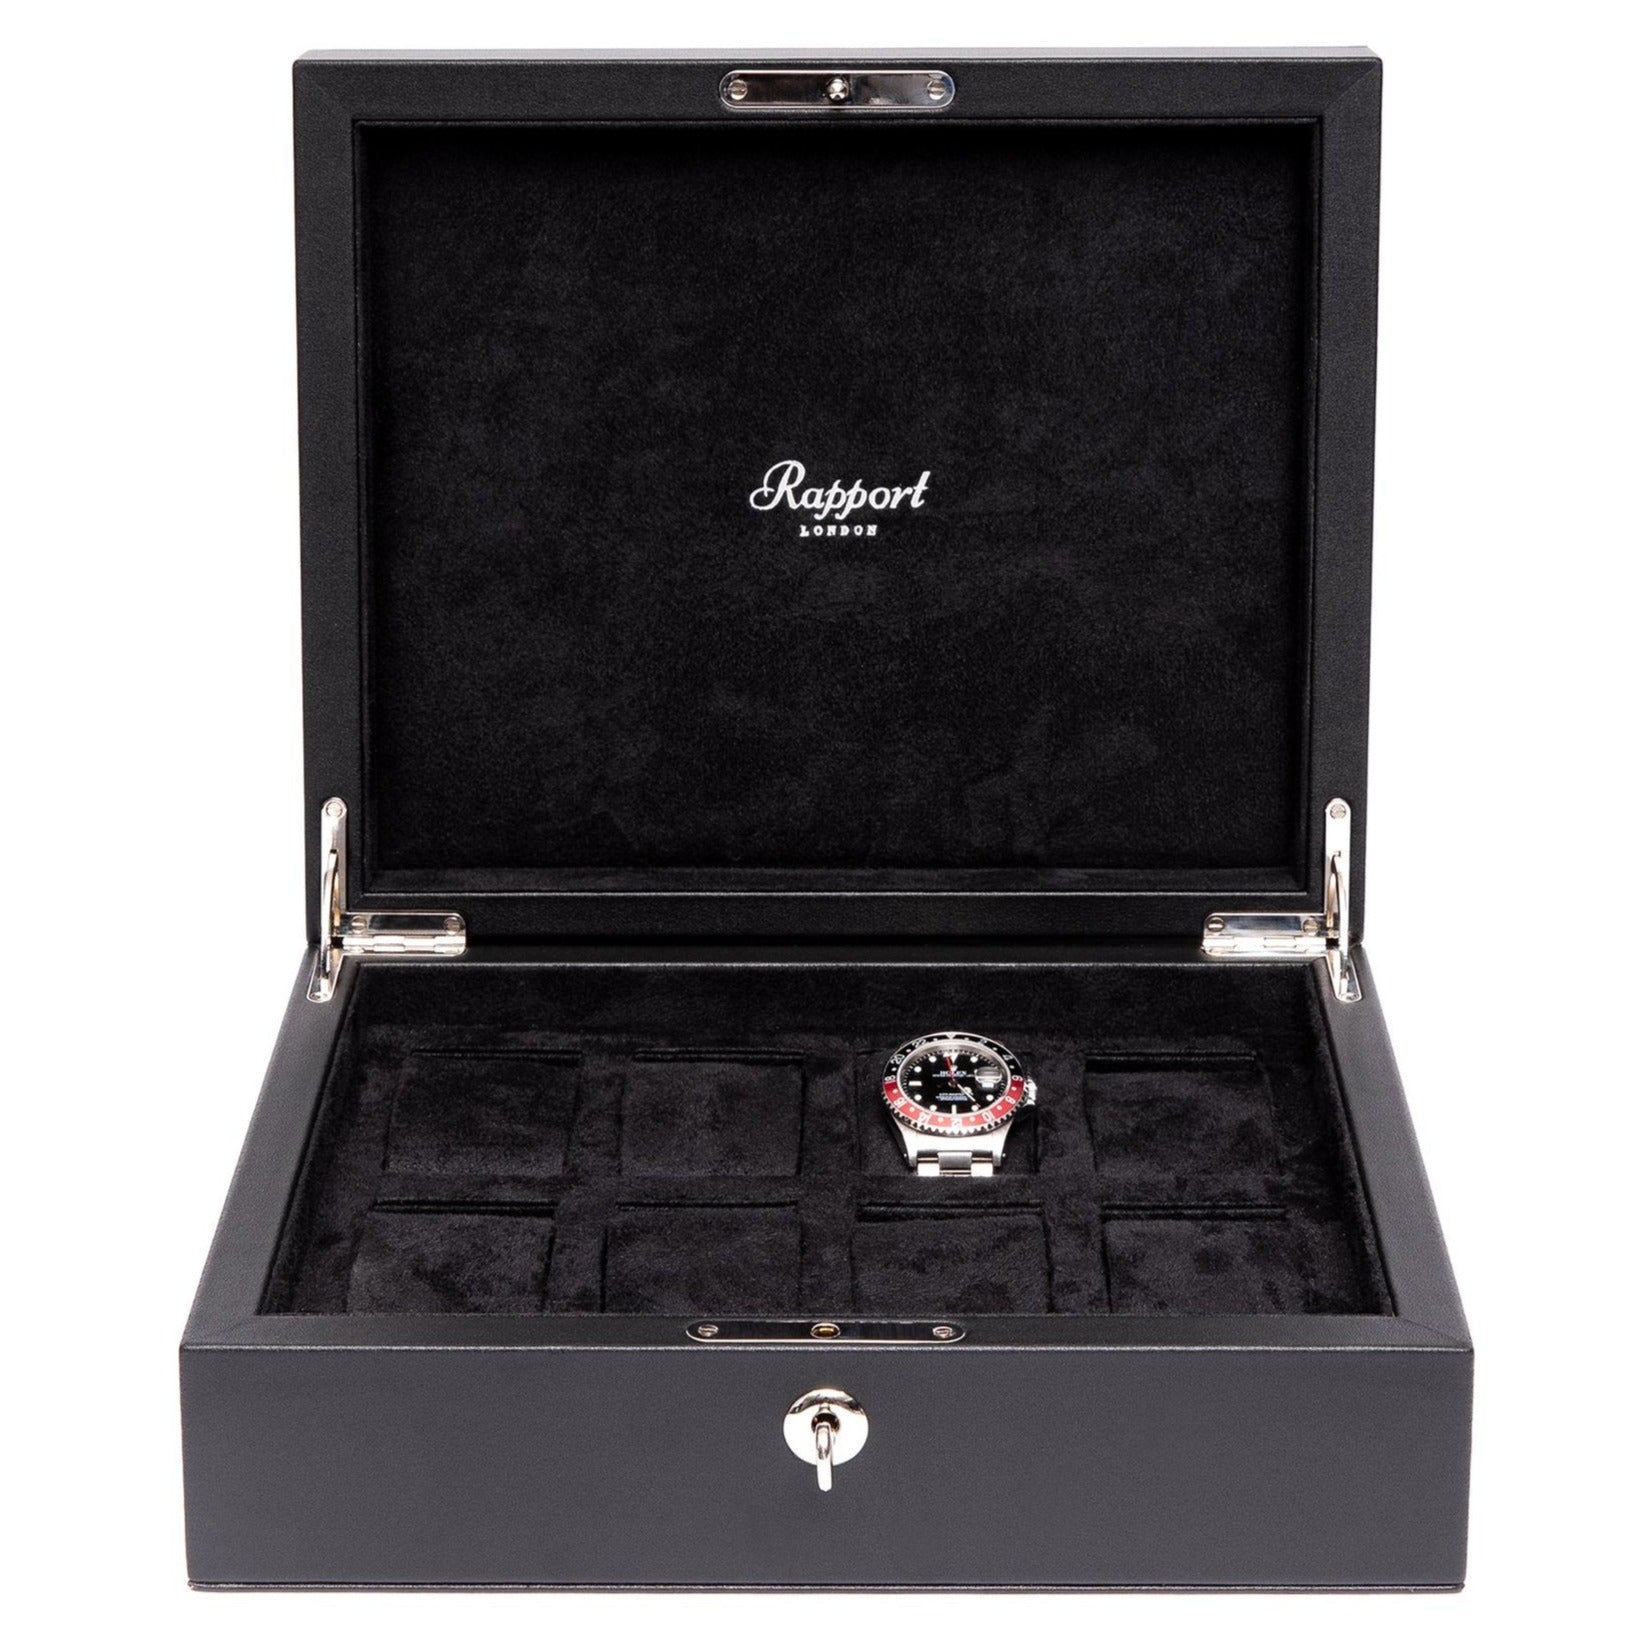 Vantage 17 Jewels, Vintage Watch. Very subtle and classy : r/freemasonry